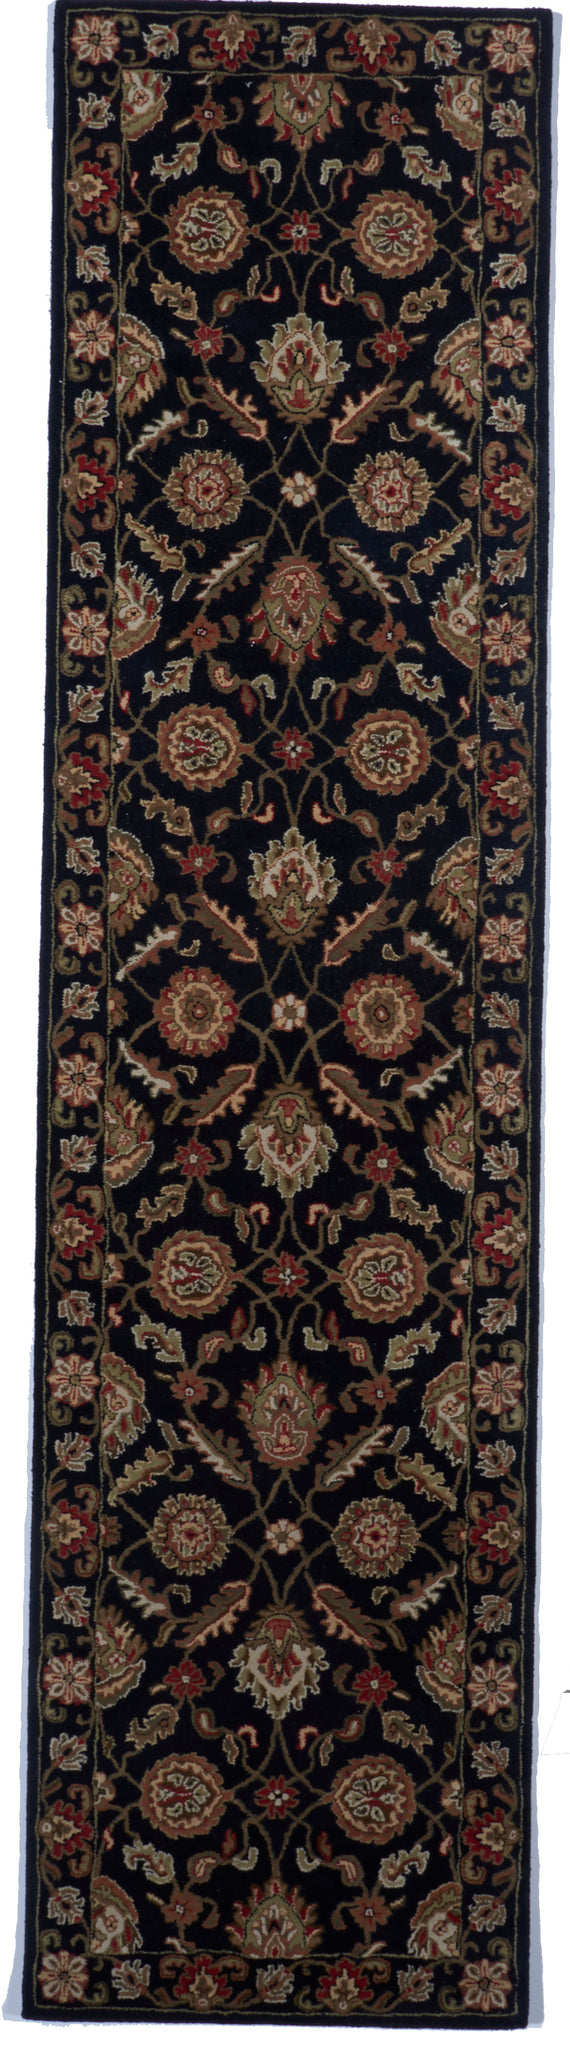 Traditional Tufted Black Runner Wool Rug 3' x 12' - IGotYourRug